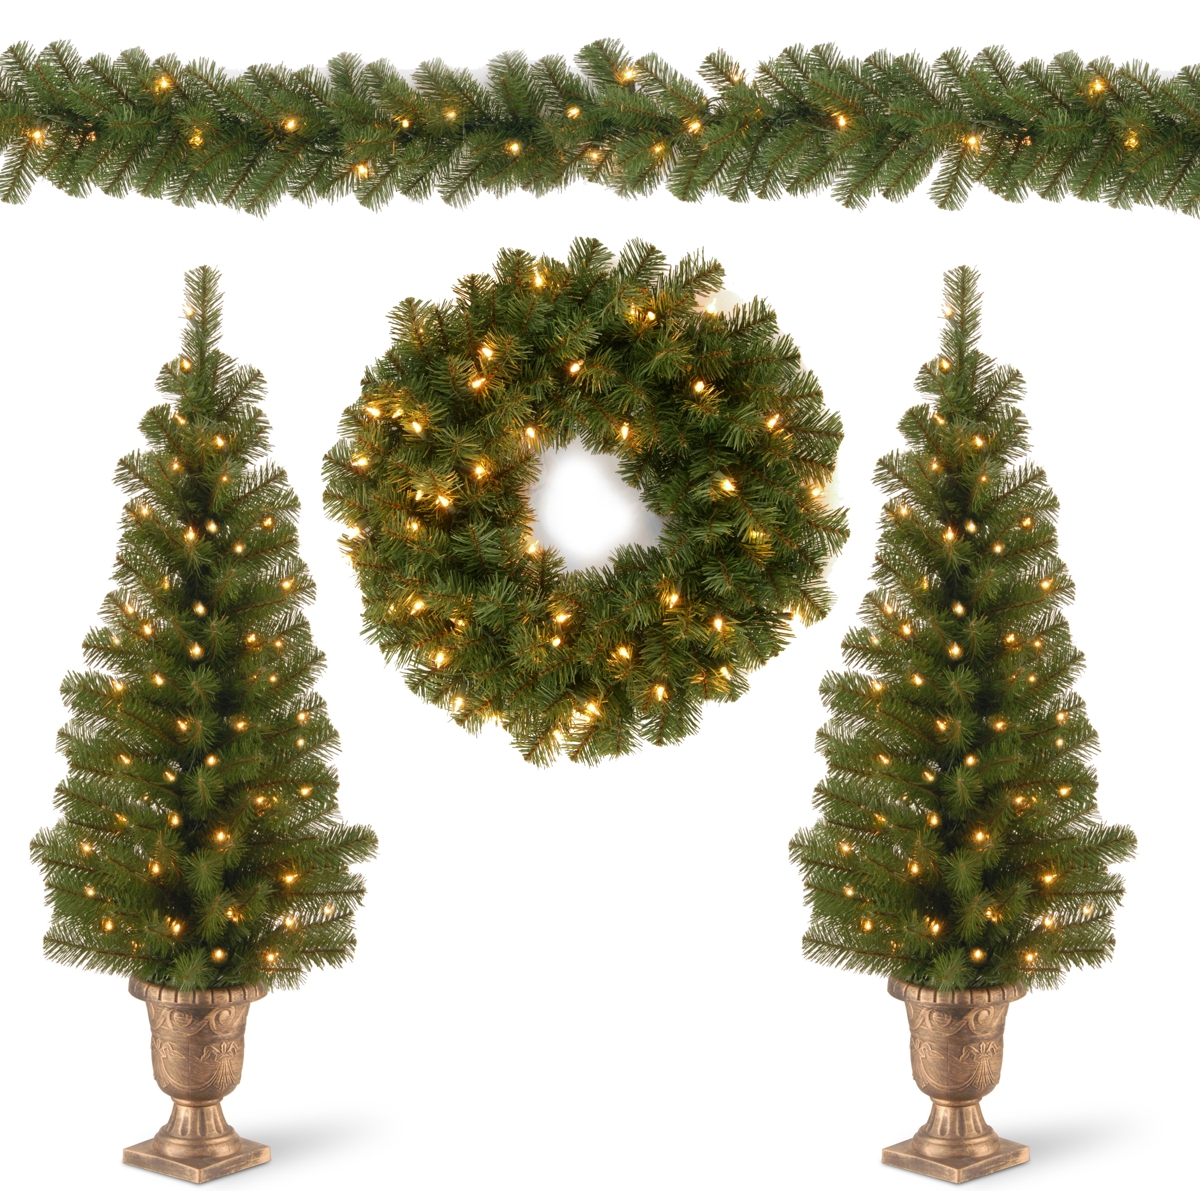 2x4' Entrance Trees in Black/Gold Pot w Clear Lts, 24" Wreath w/Warm White Lts, 9'x8" Garland w/Clear Lts - Green